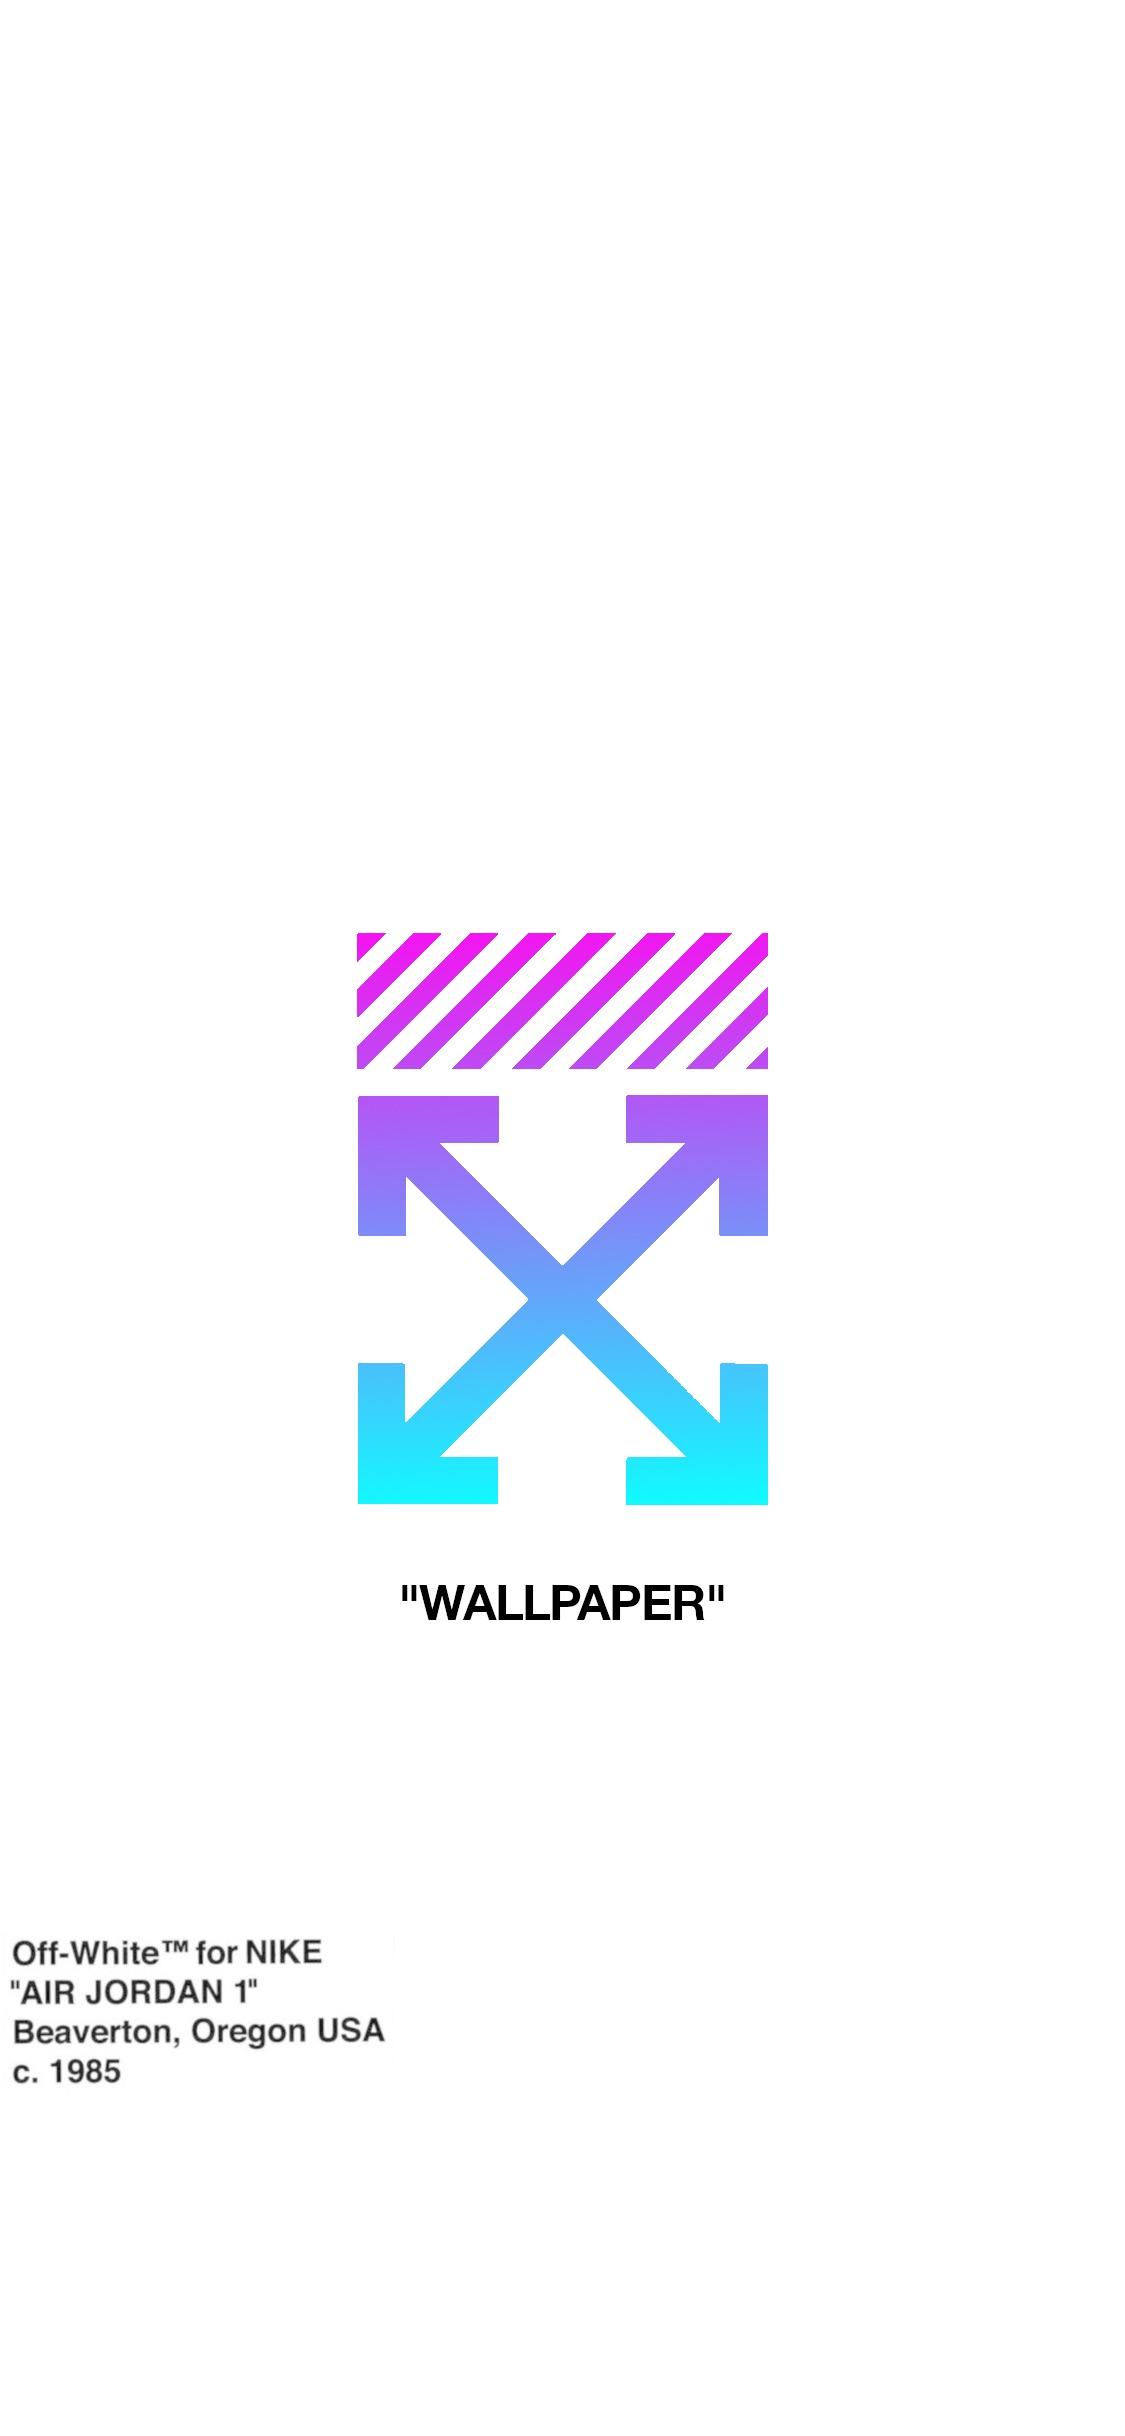 Off White Logo Wallpapers On Wallpaperdog